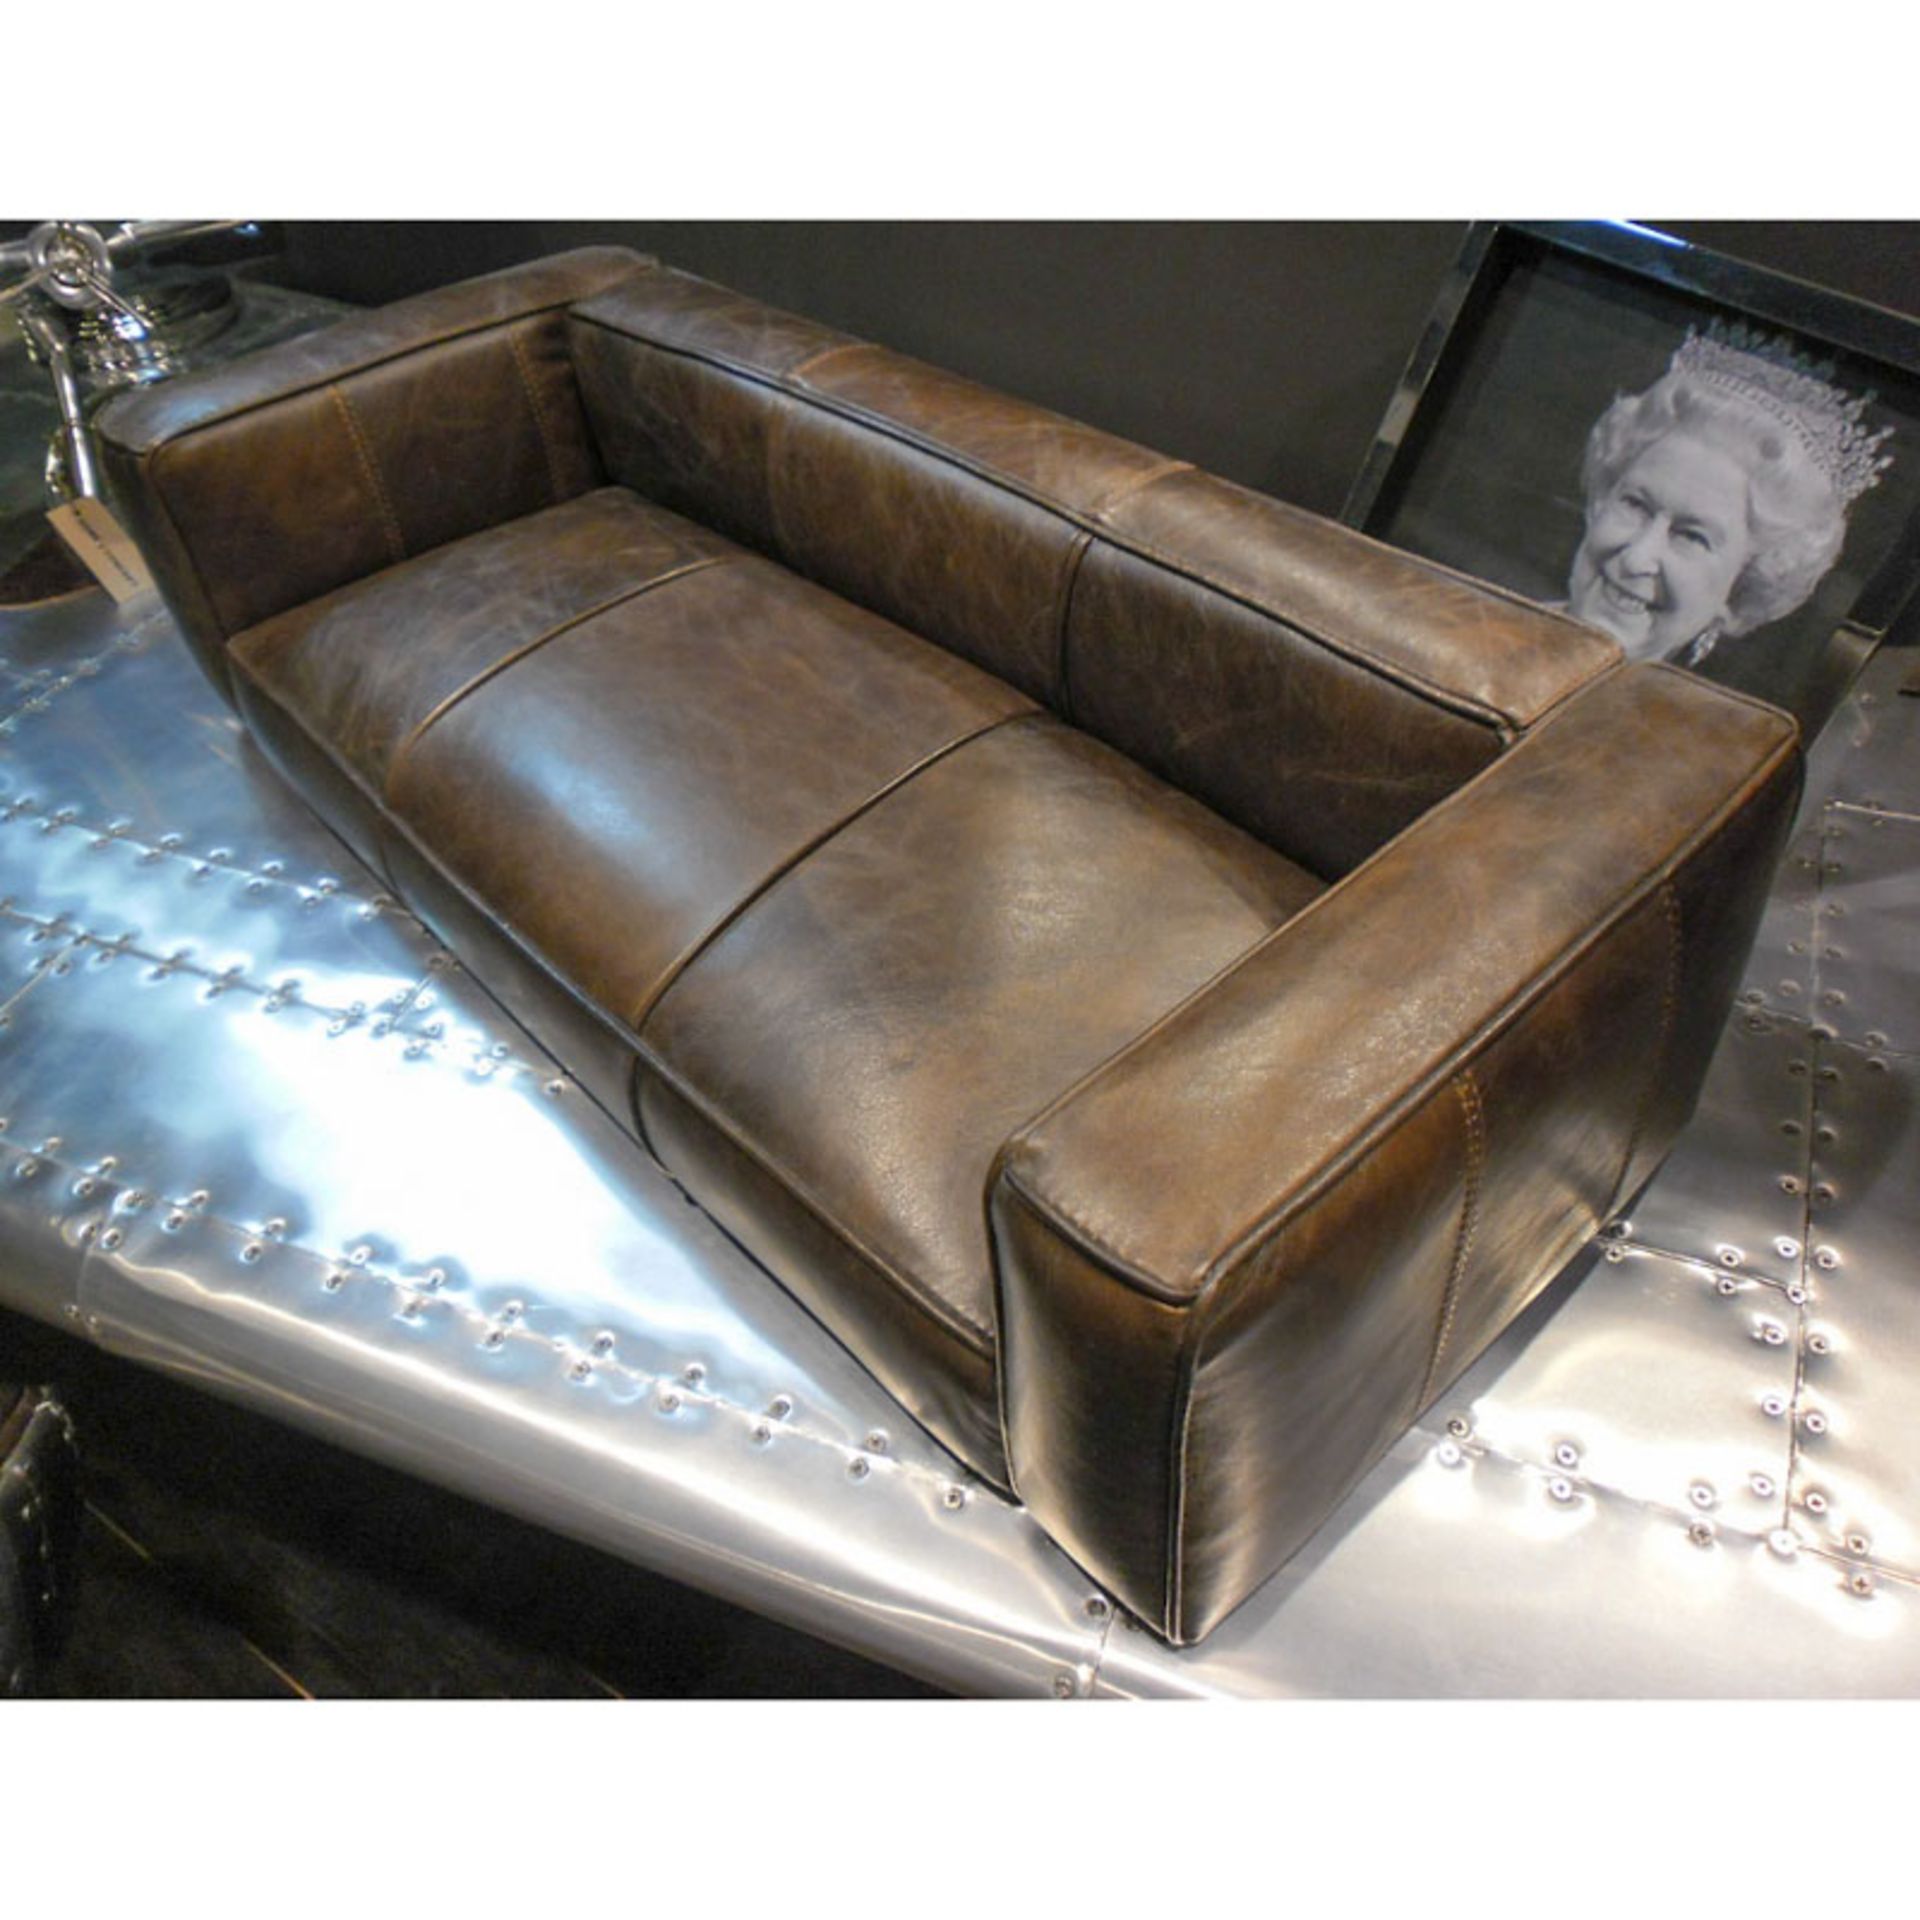 Mini Tribeca 3 Seater Sofa in Viintage Cigar Leather 62 x 31 x 20cm RRP £305